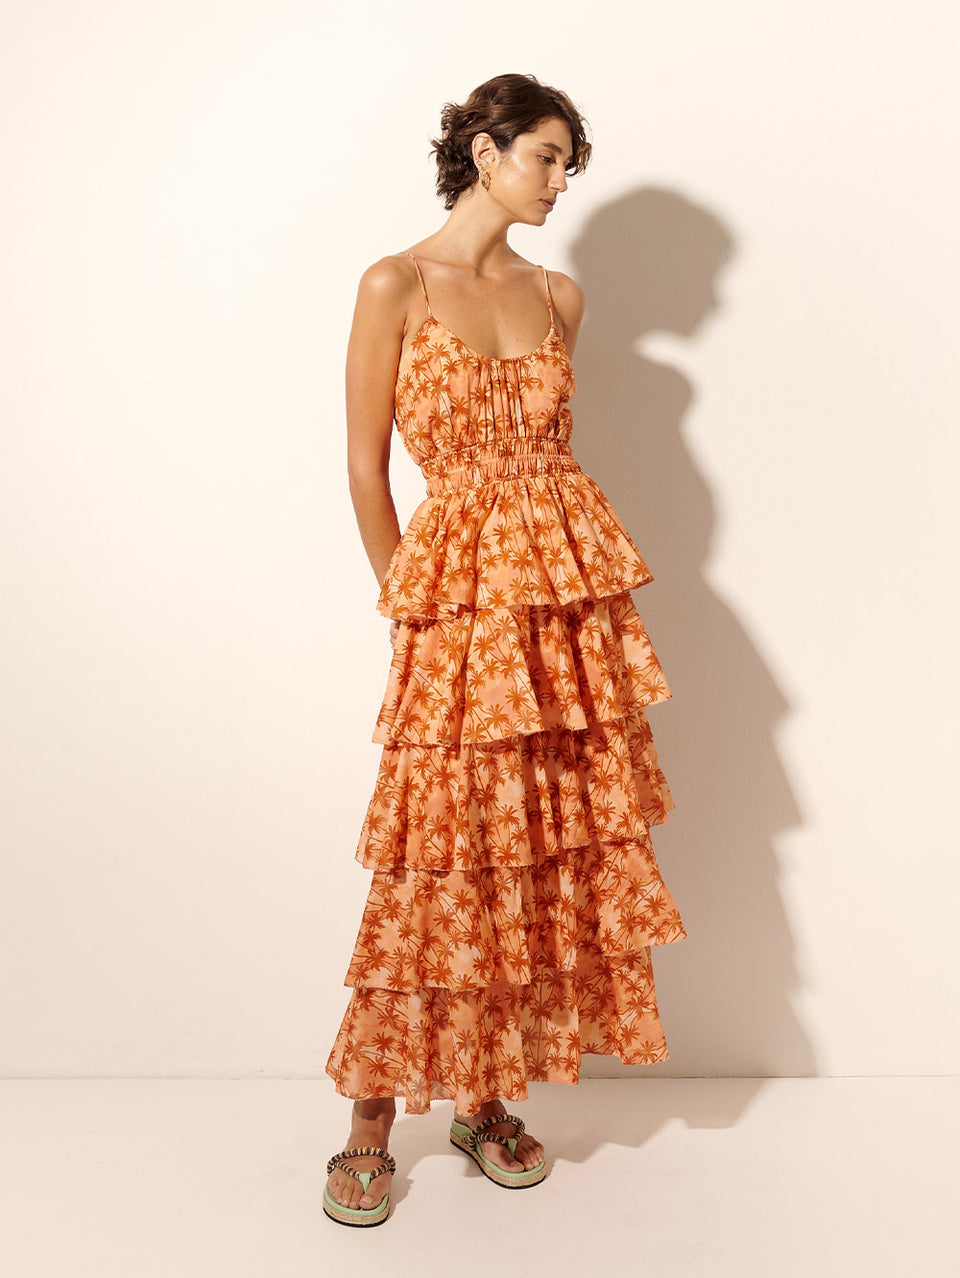 Leilani Maxi Dress KIVARI | Model wears bronze and peach palm printed maxi dress